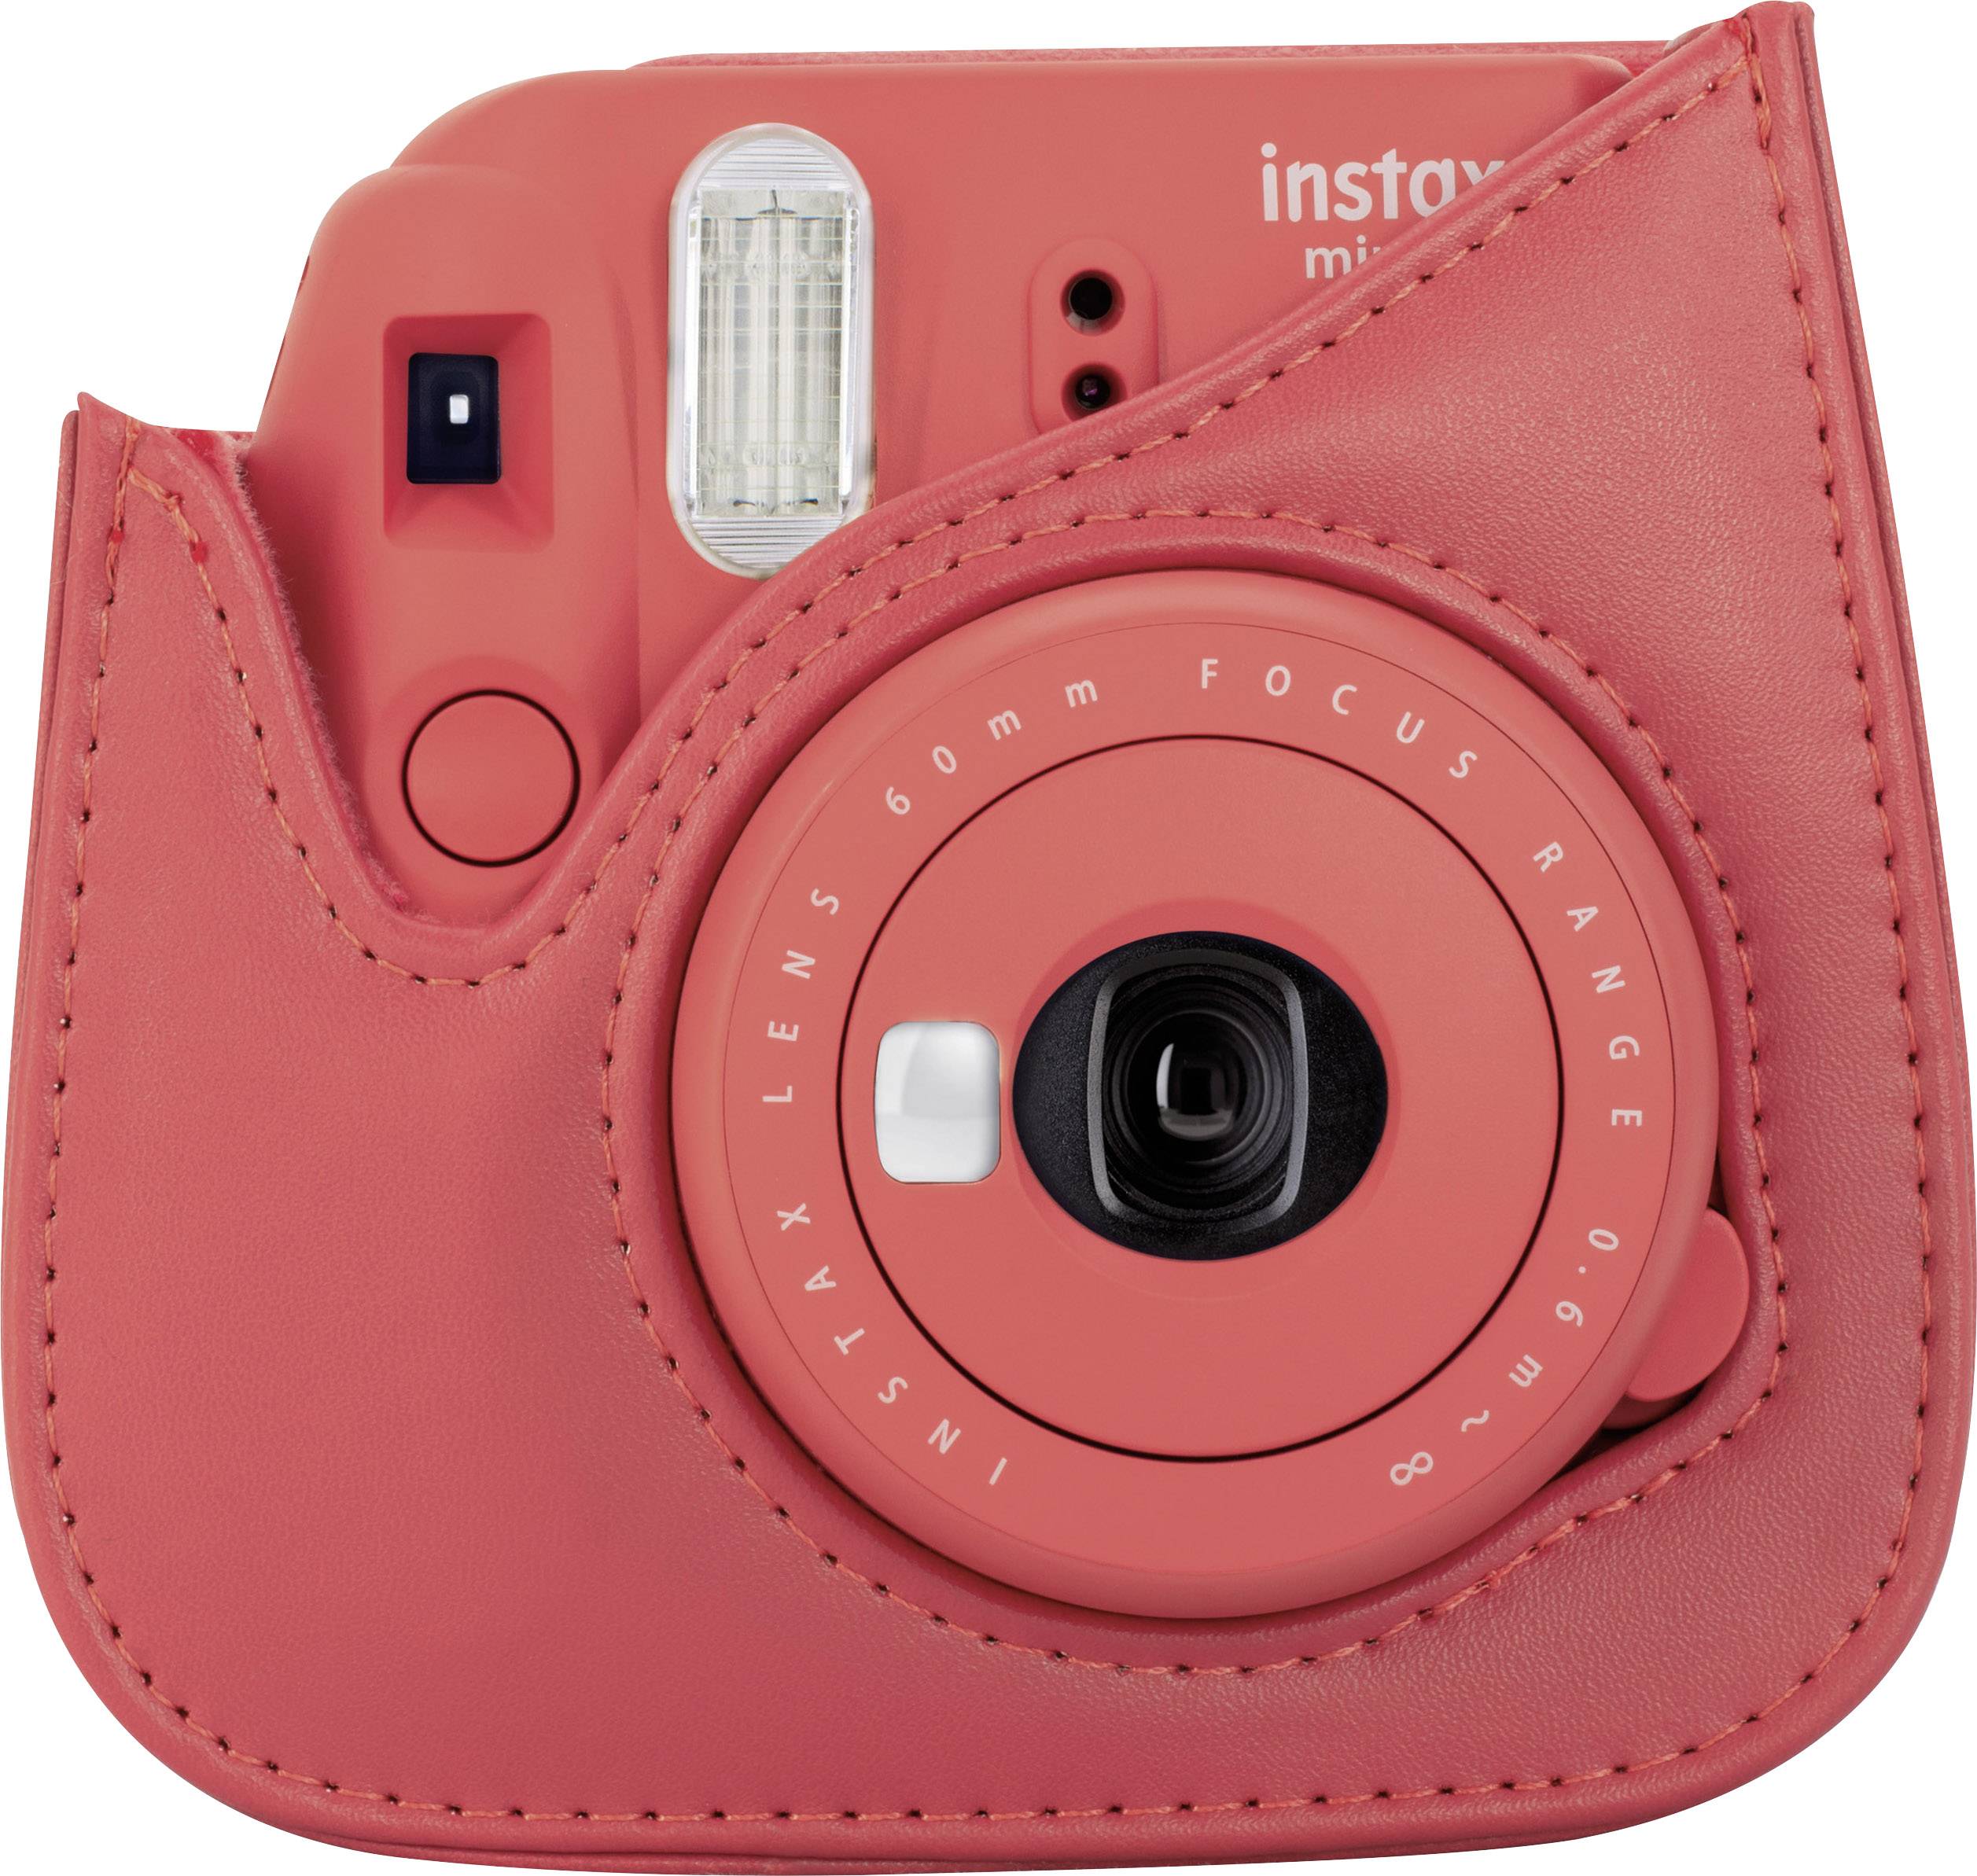 Fujifilm Instax Mini 9 Bag poppy red -laukku 